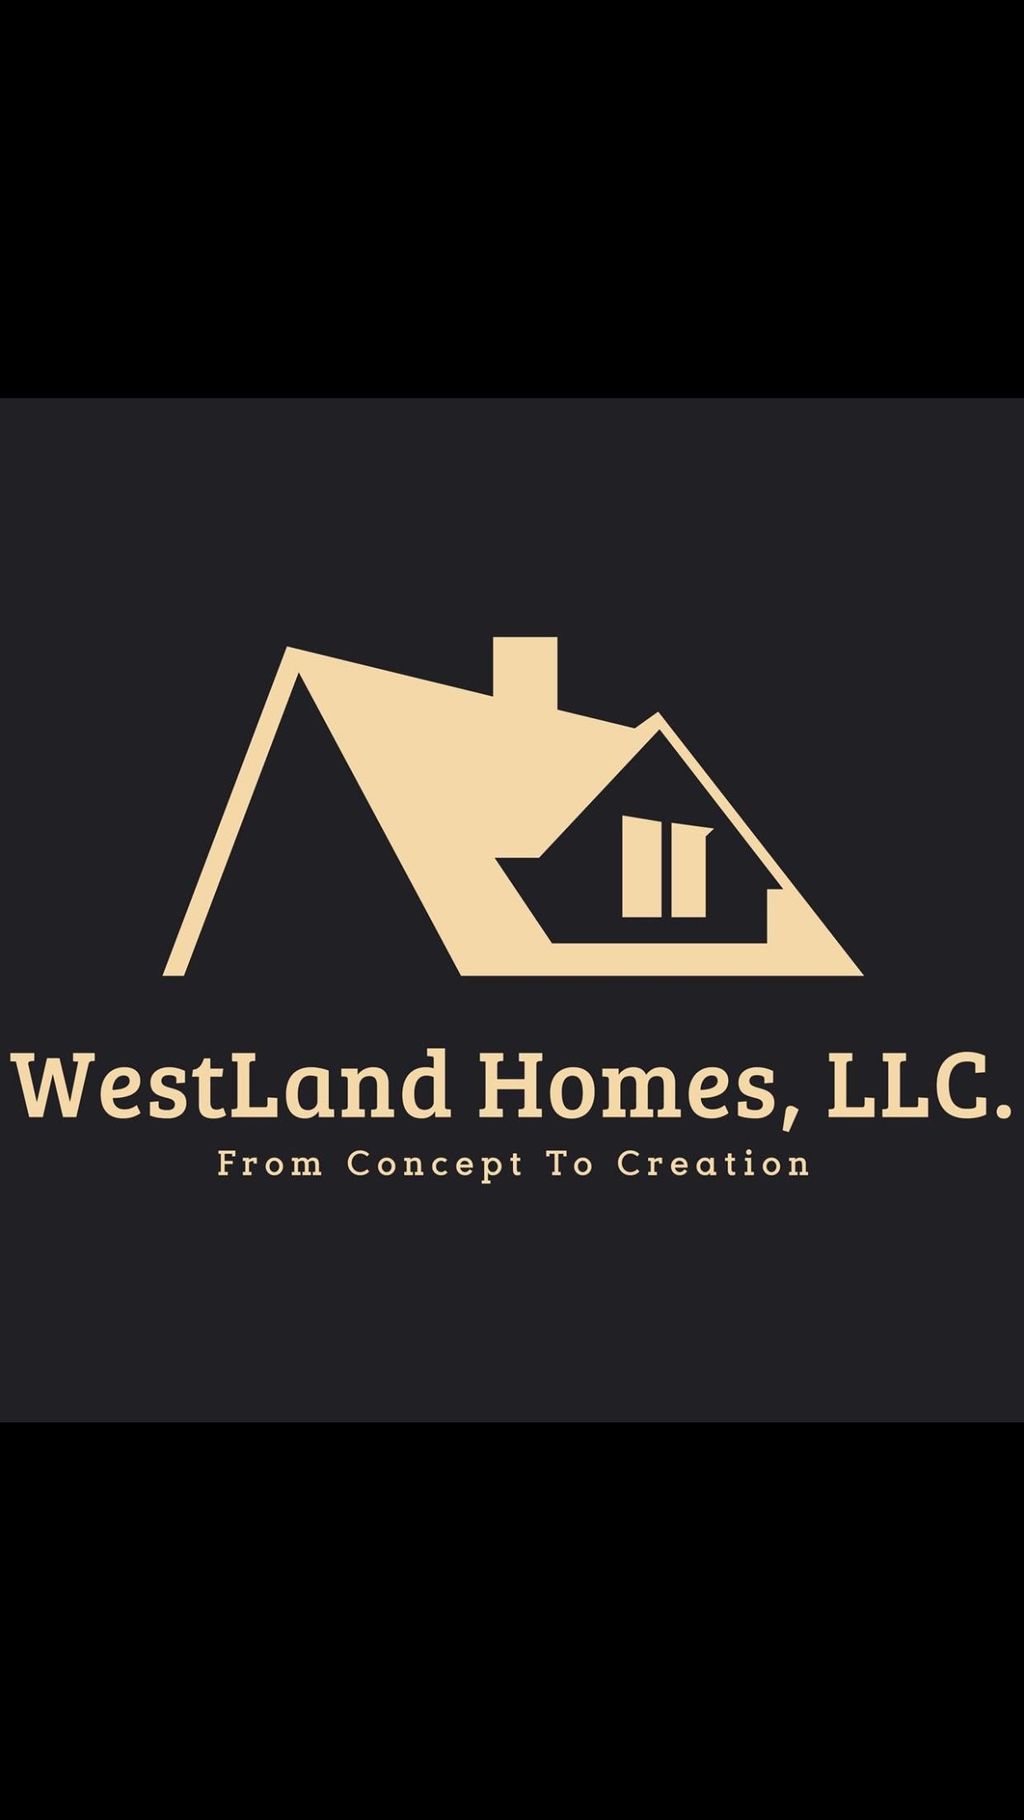 WestLand Homes, LLC. General Contractor